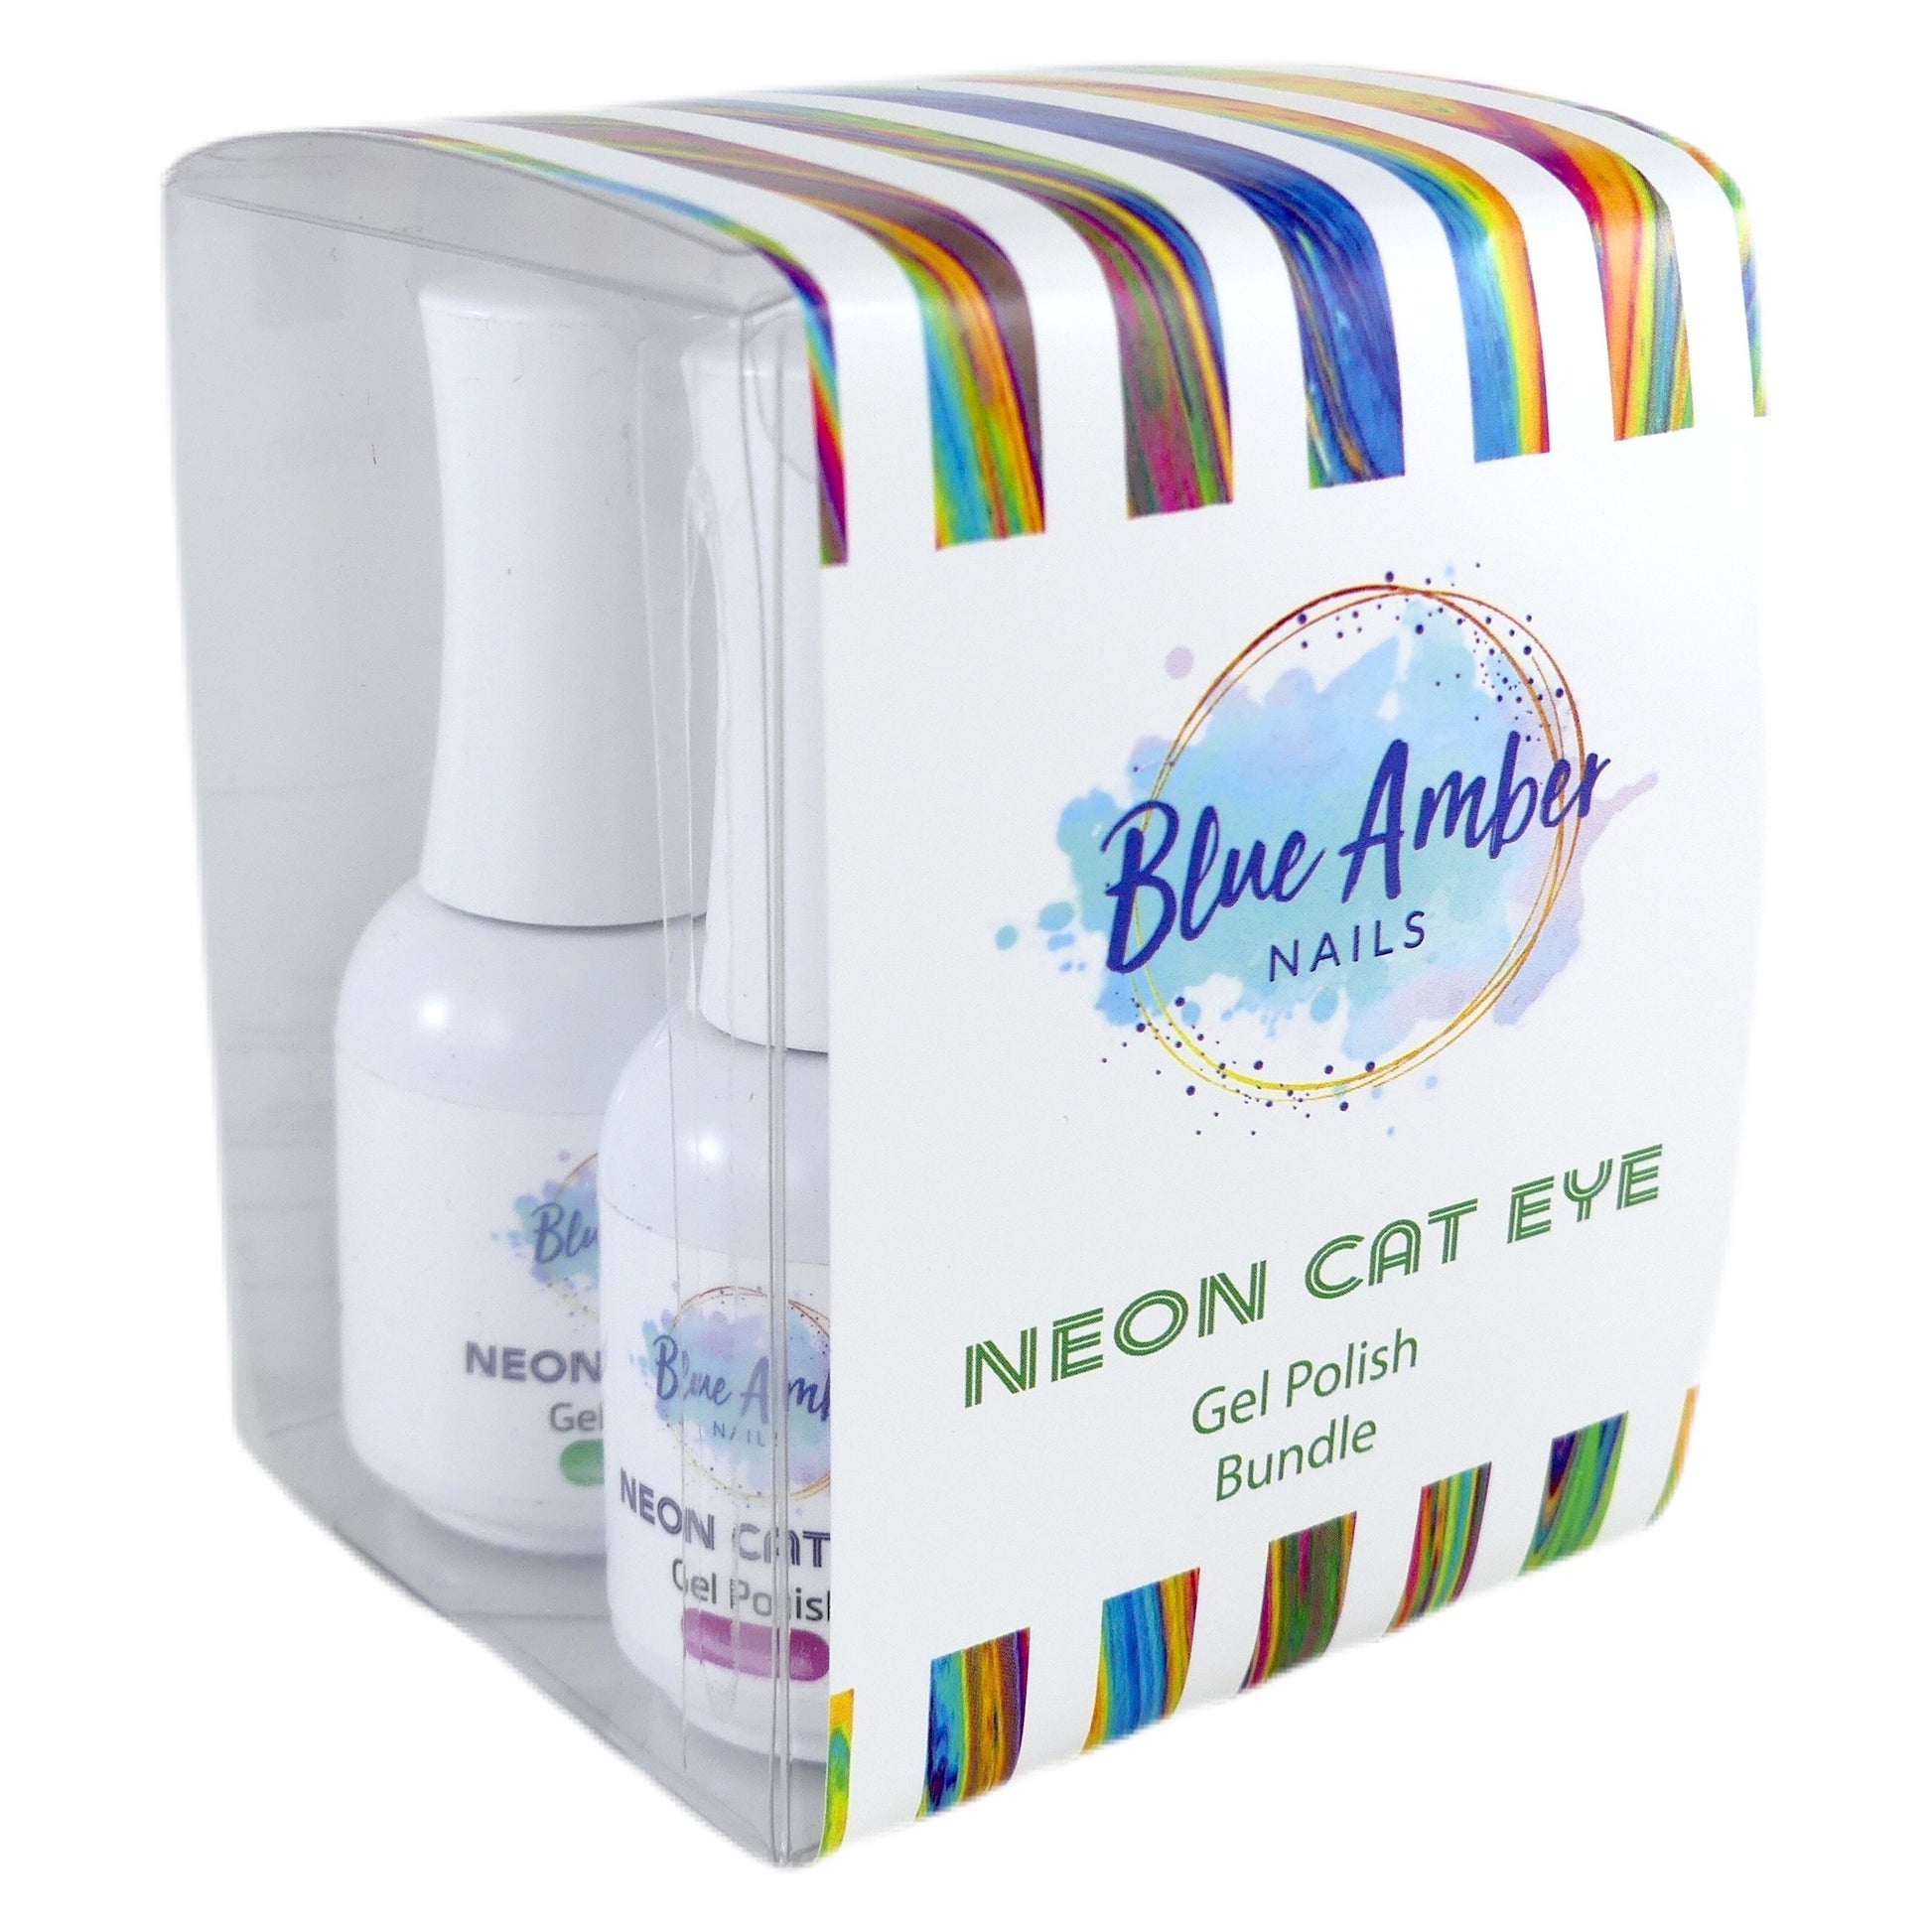 Neon Cat Eye Bundle - 4 Gel Polishes + 2 magnets - My Little Nail Art Shop